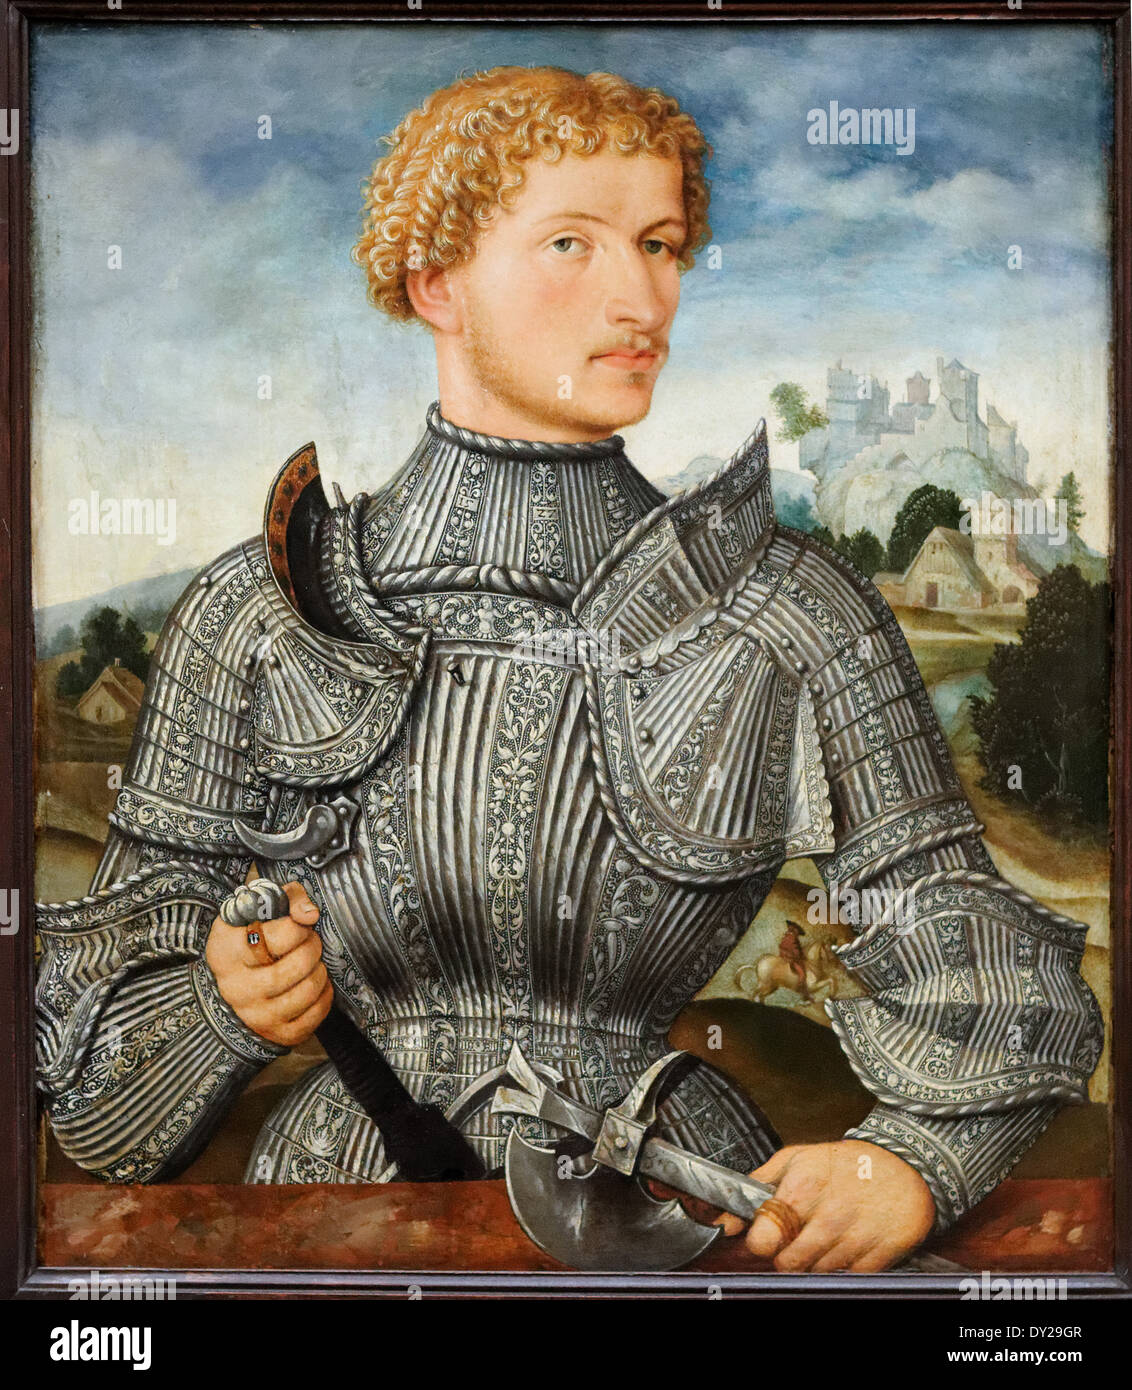 Meister LS - Portrait of Herm Rehlinger - 1540 - XVI th Century - German School - Gemäldegalerie - Berlin Stock Photo